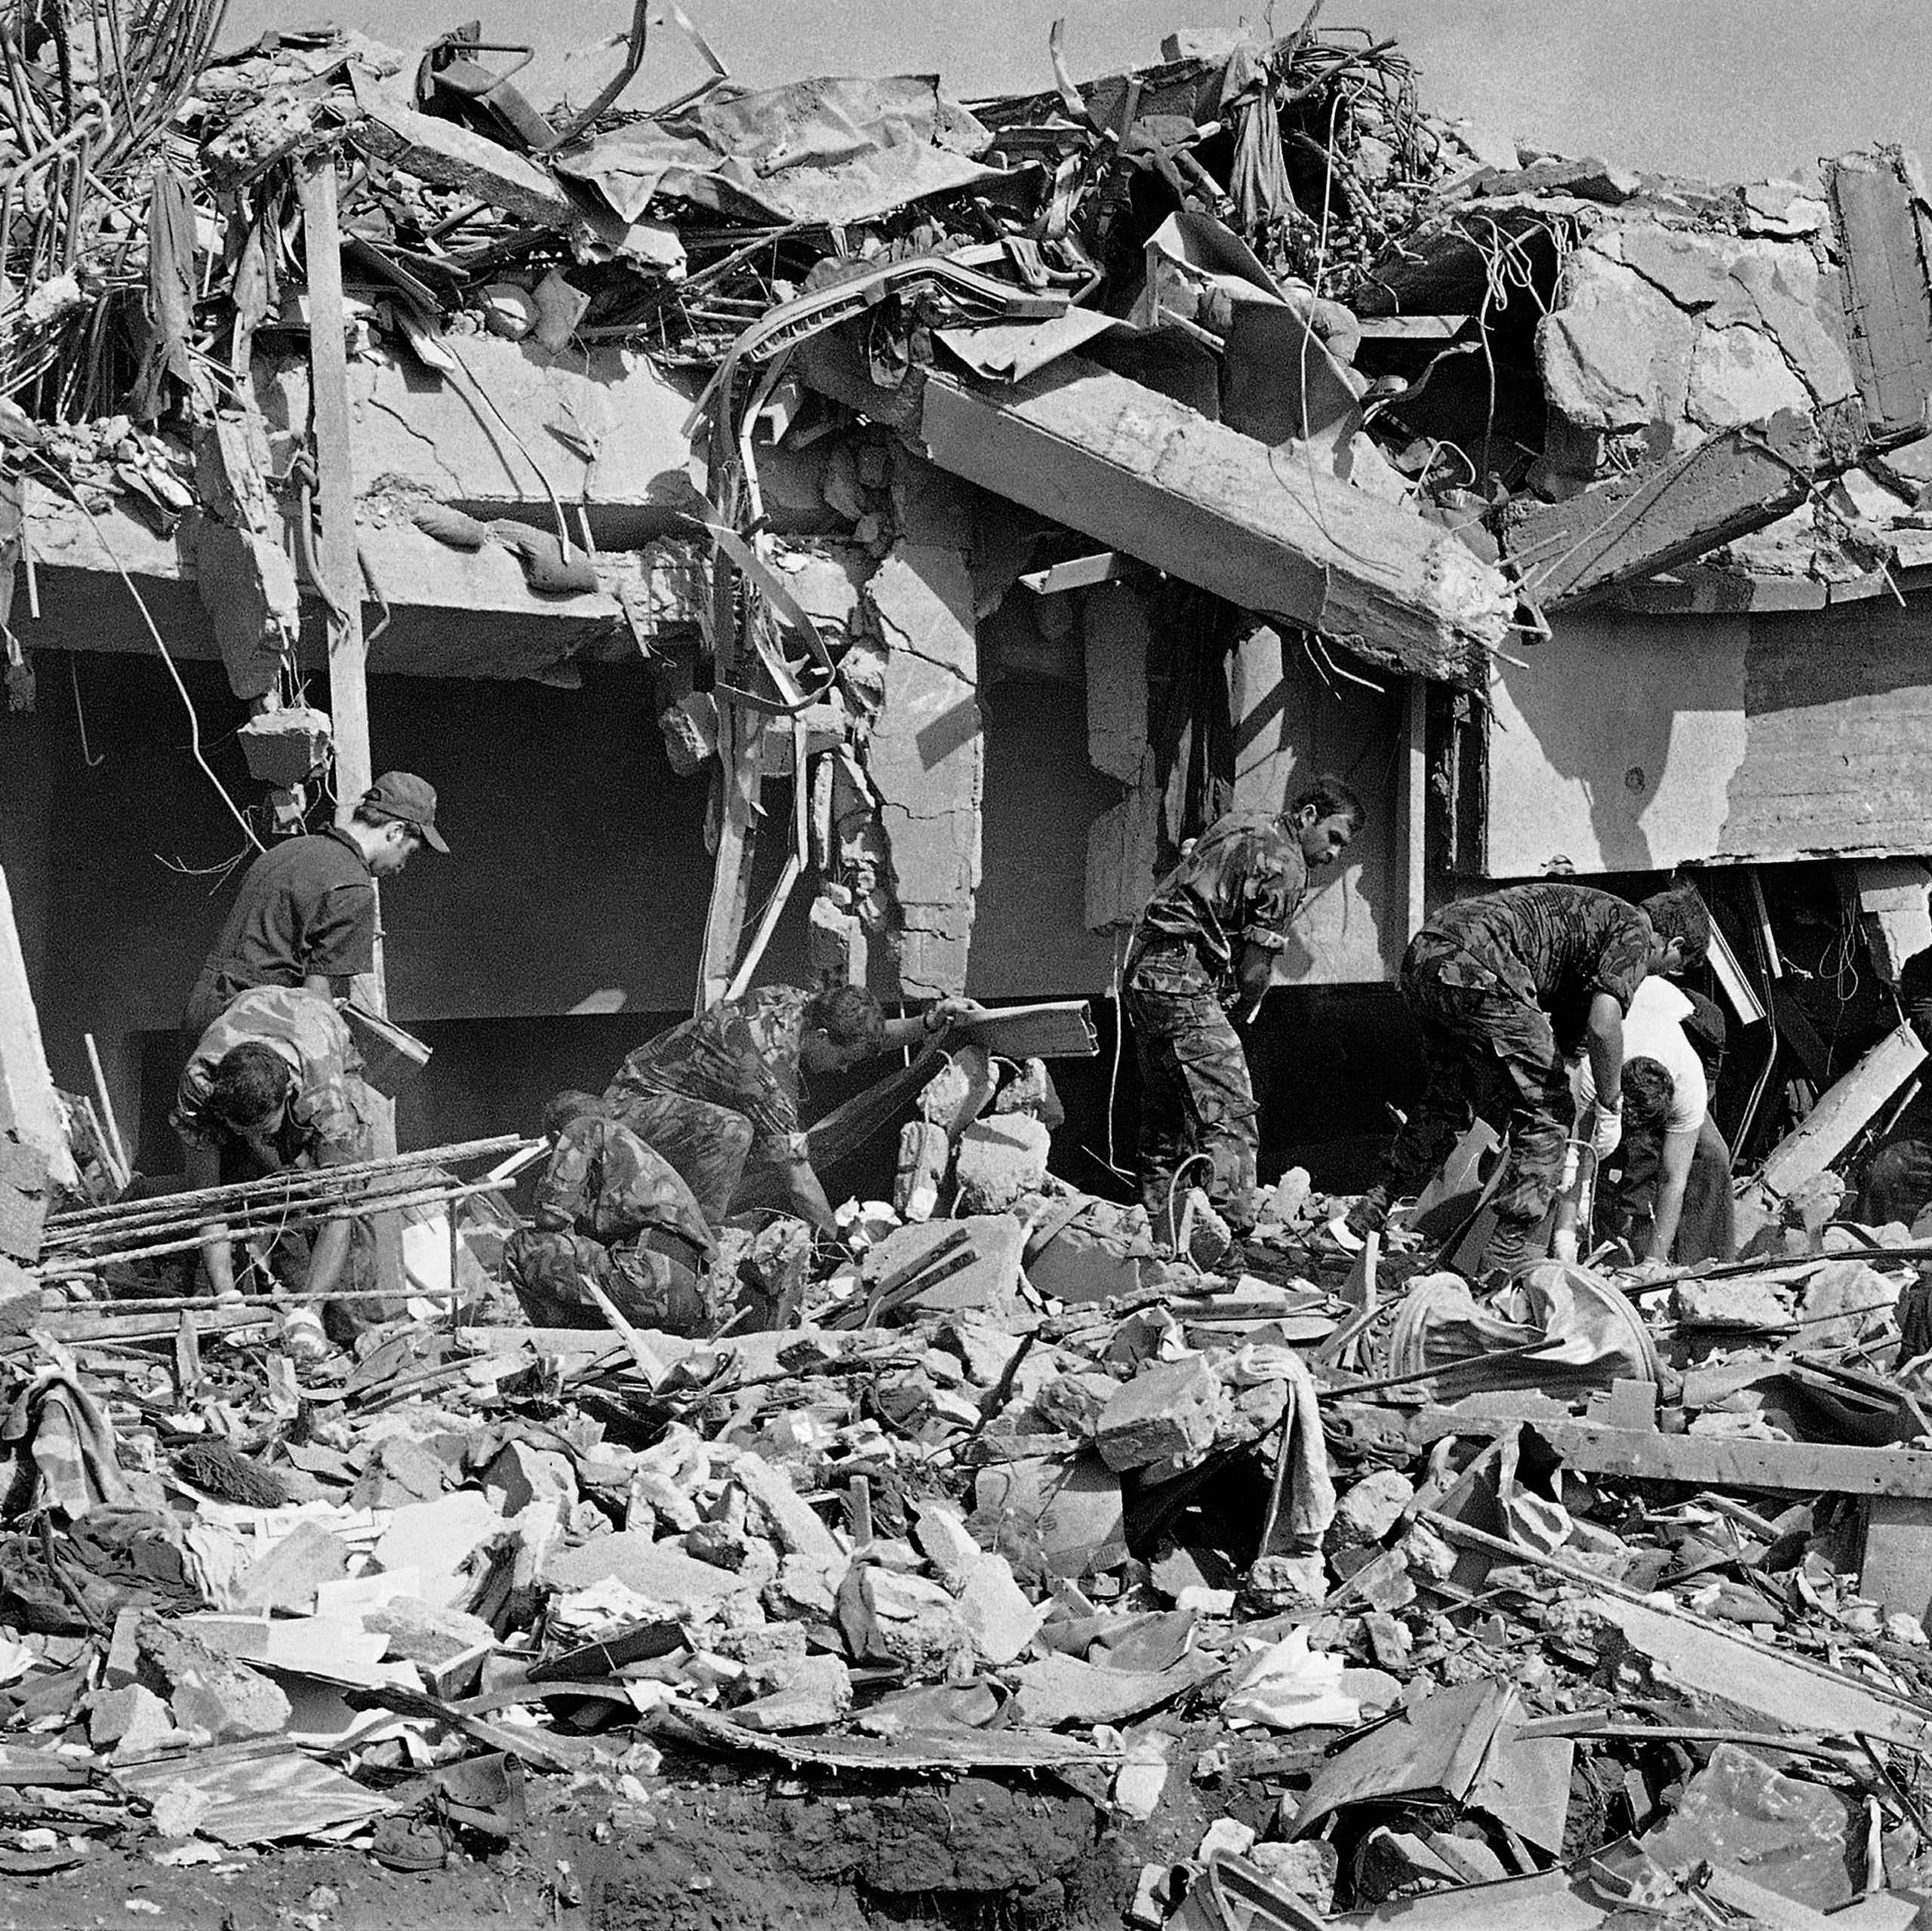 Men in fatigues sort through rubble